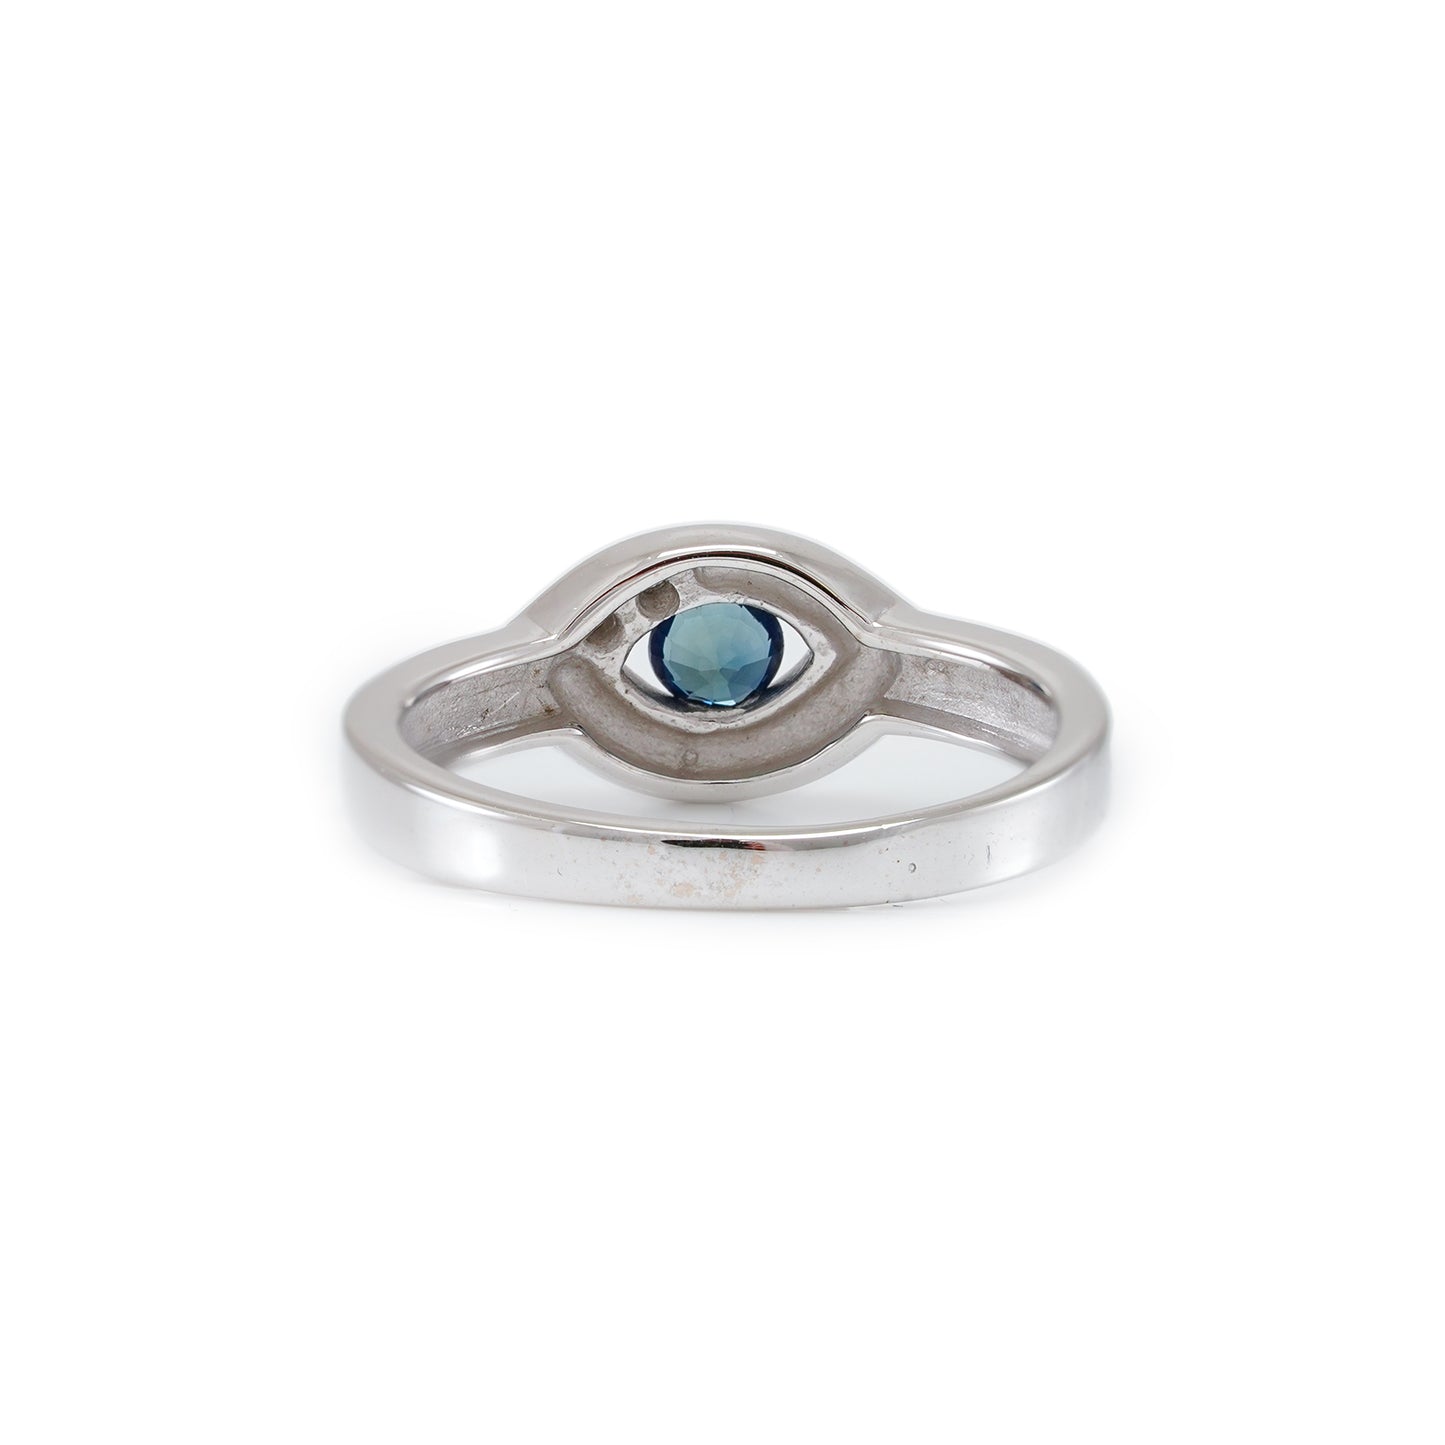 Gemstone ring diamond spinel white gold 14K women's jewelry women's ring gold ring